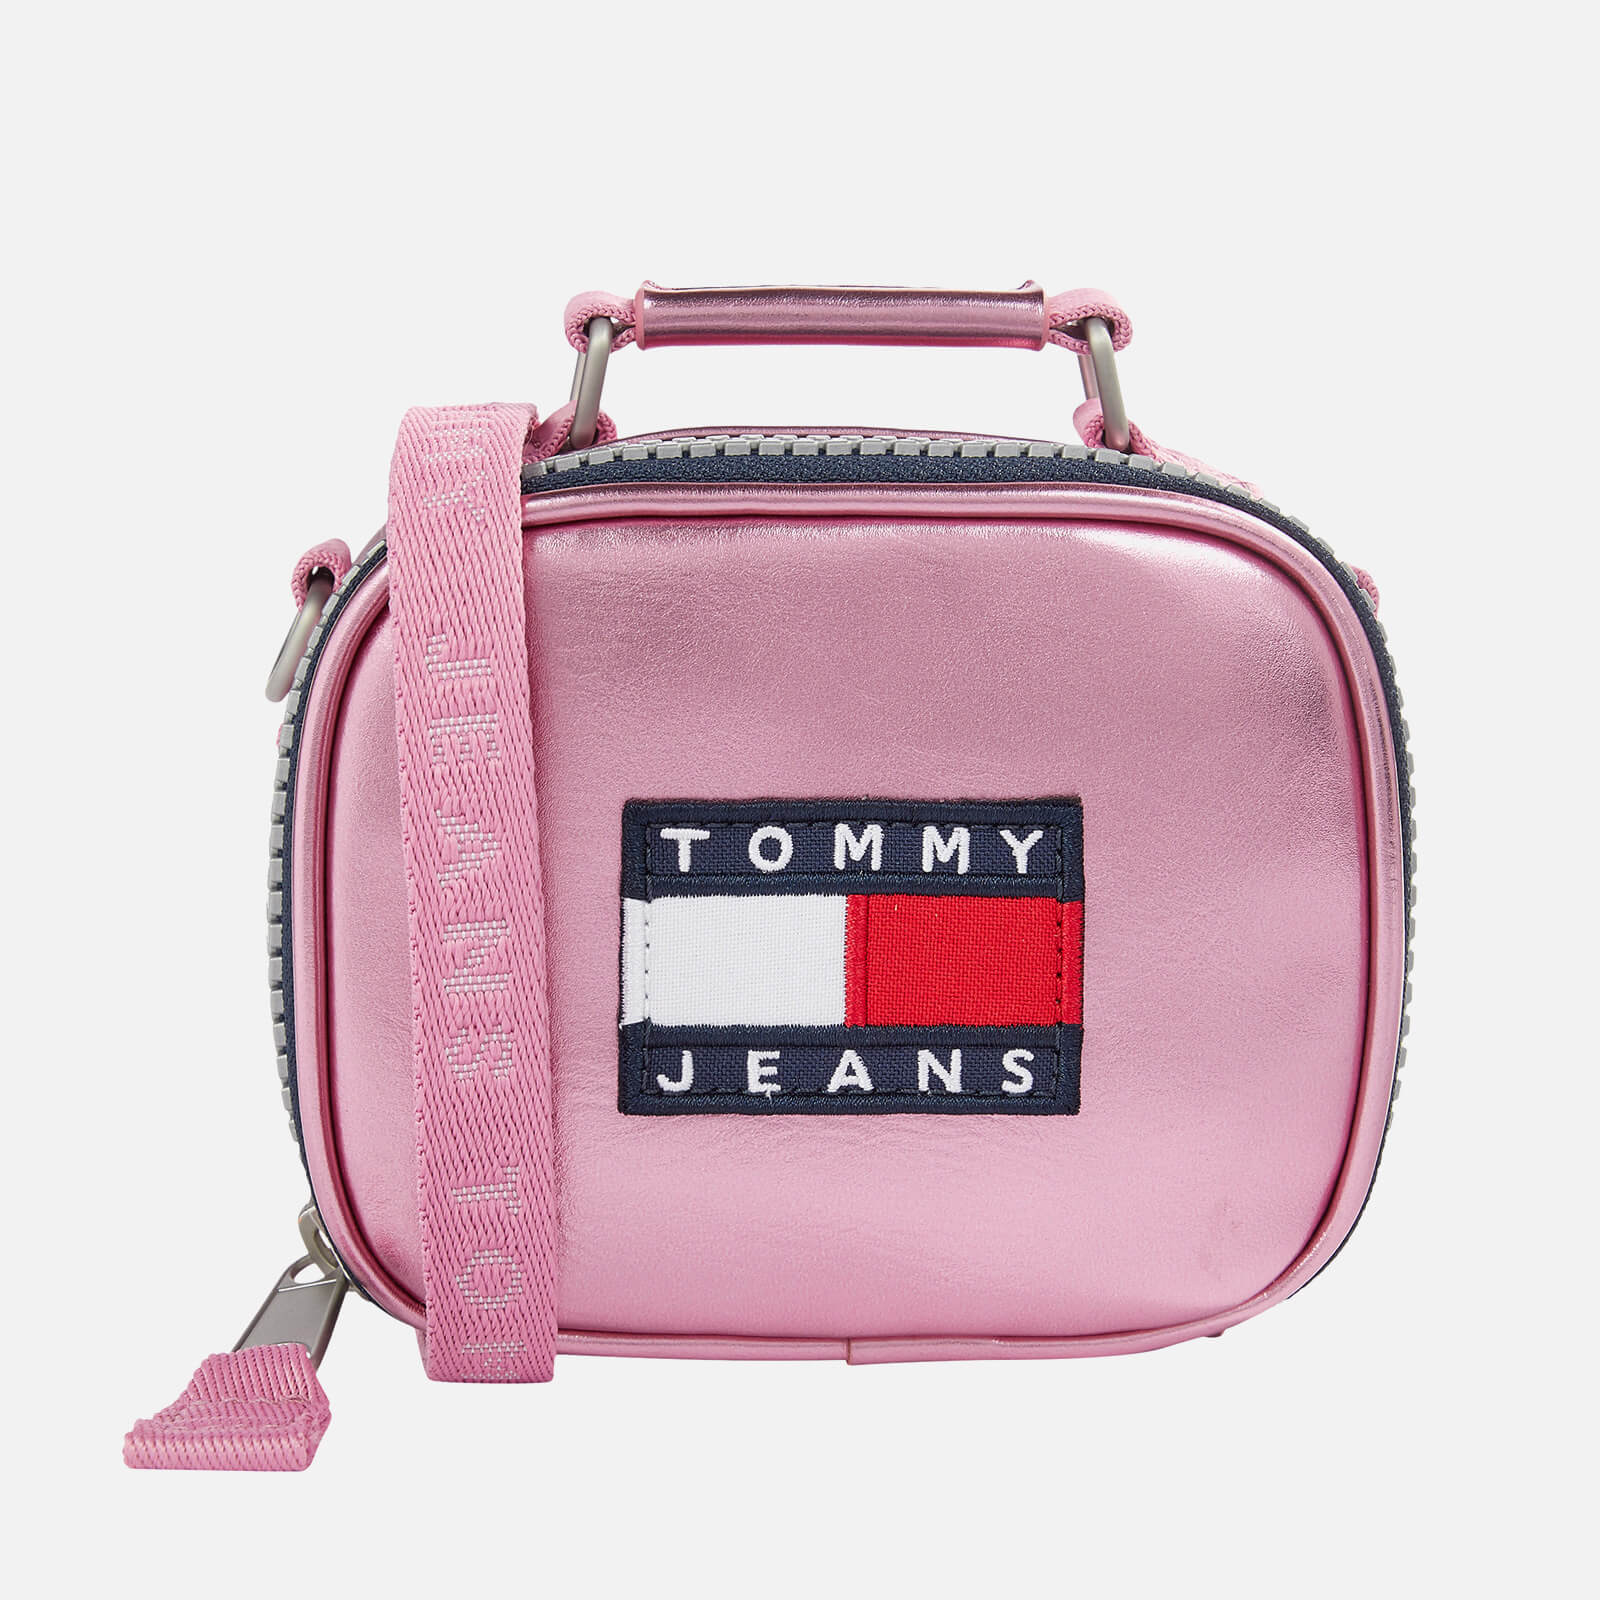 Tommy Jeans Women's Heritage Metallic Nano Bag - Pink Daisy